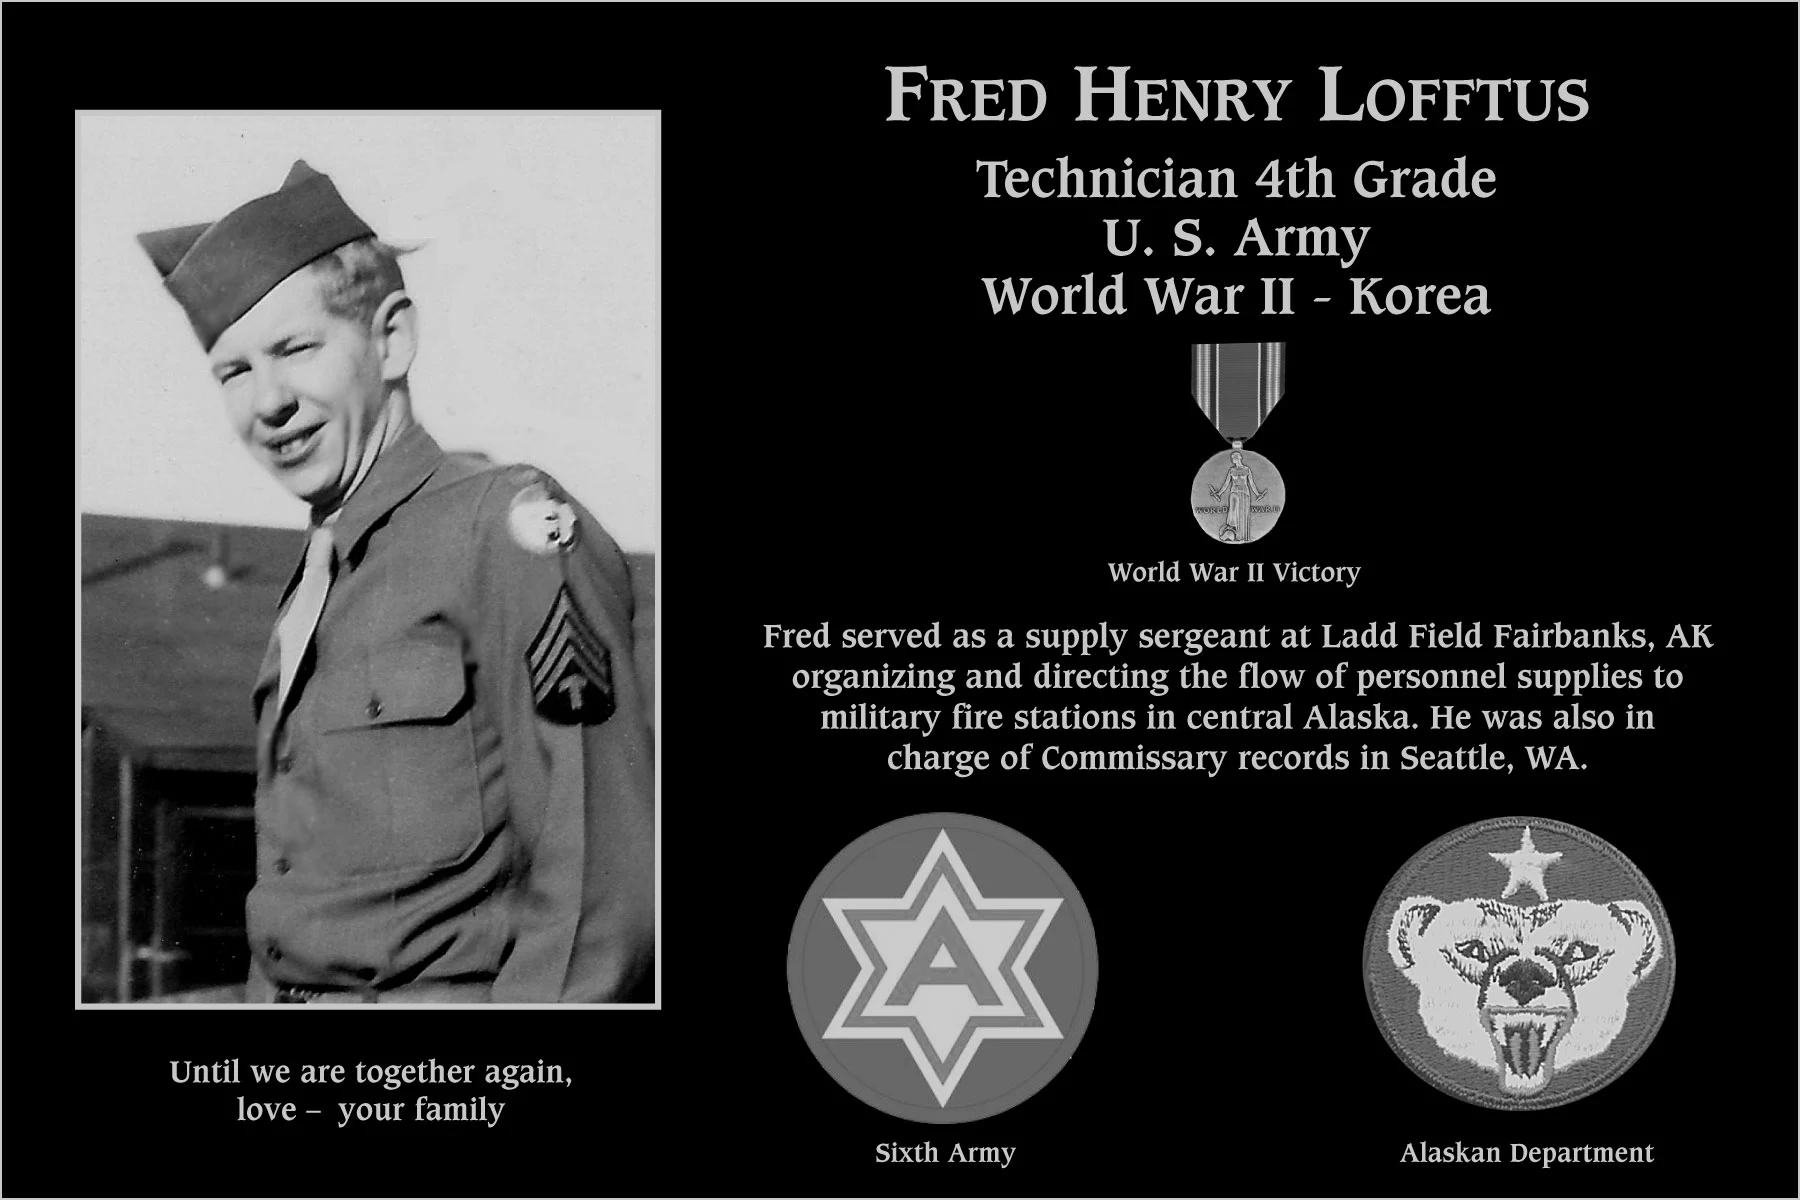 Fred Henry Lofftus